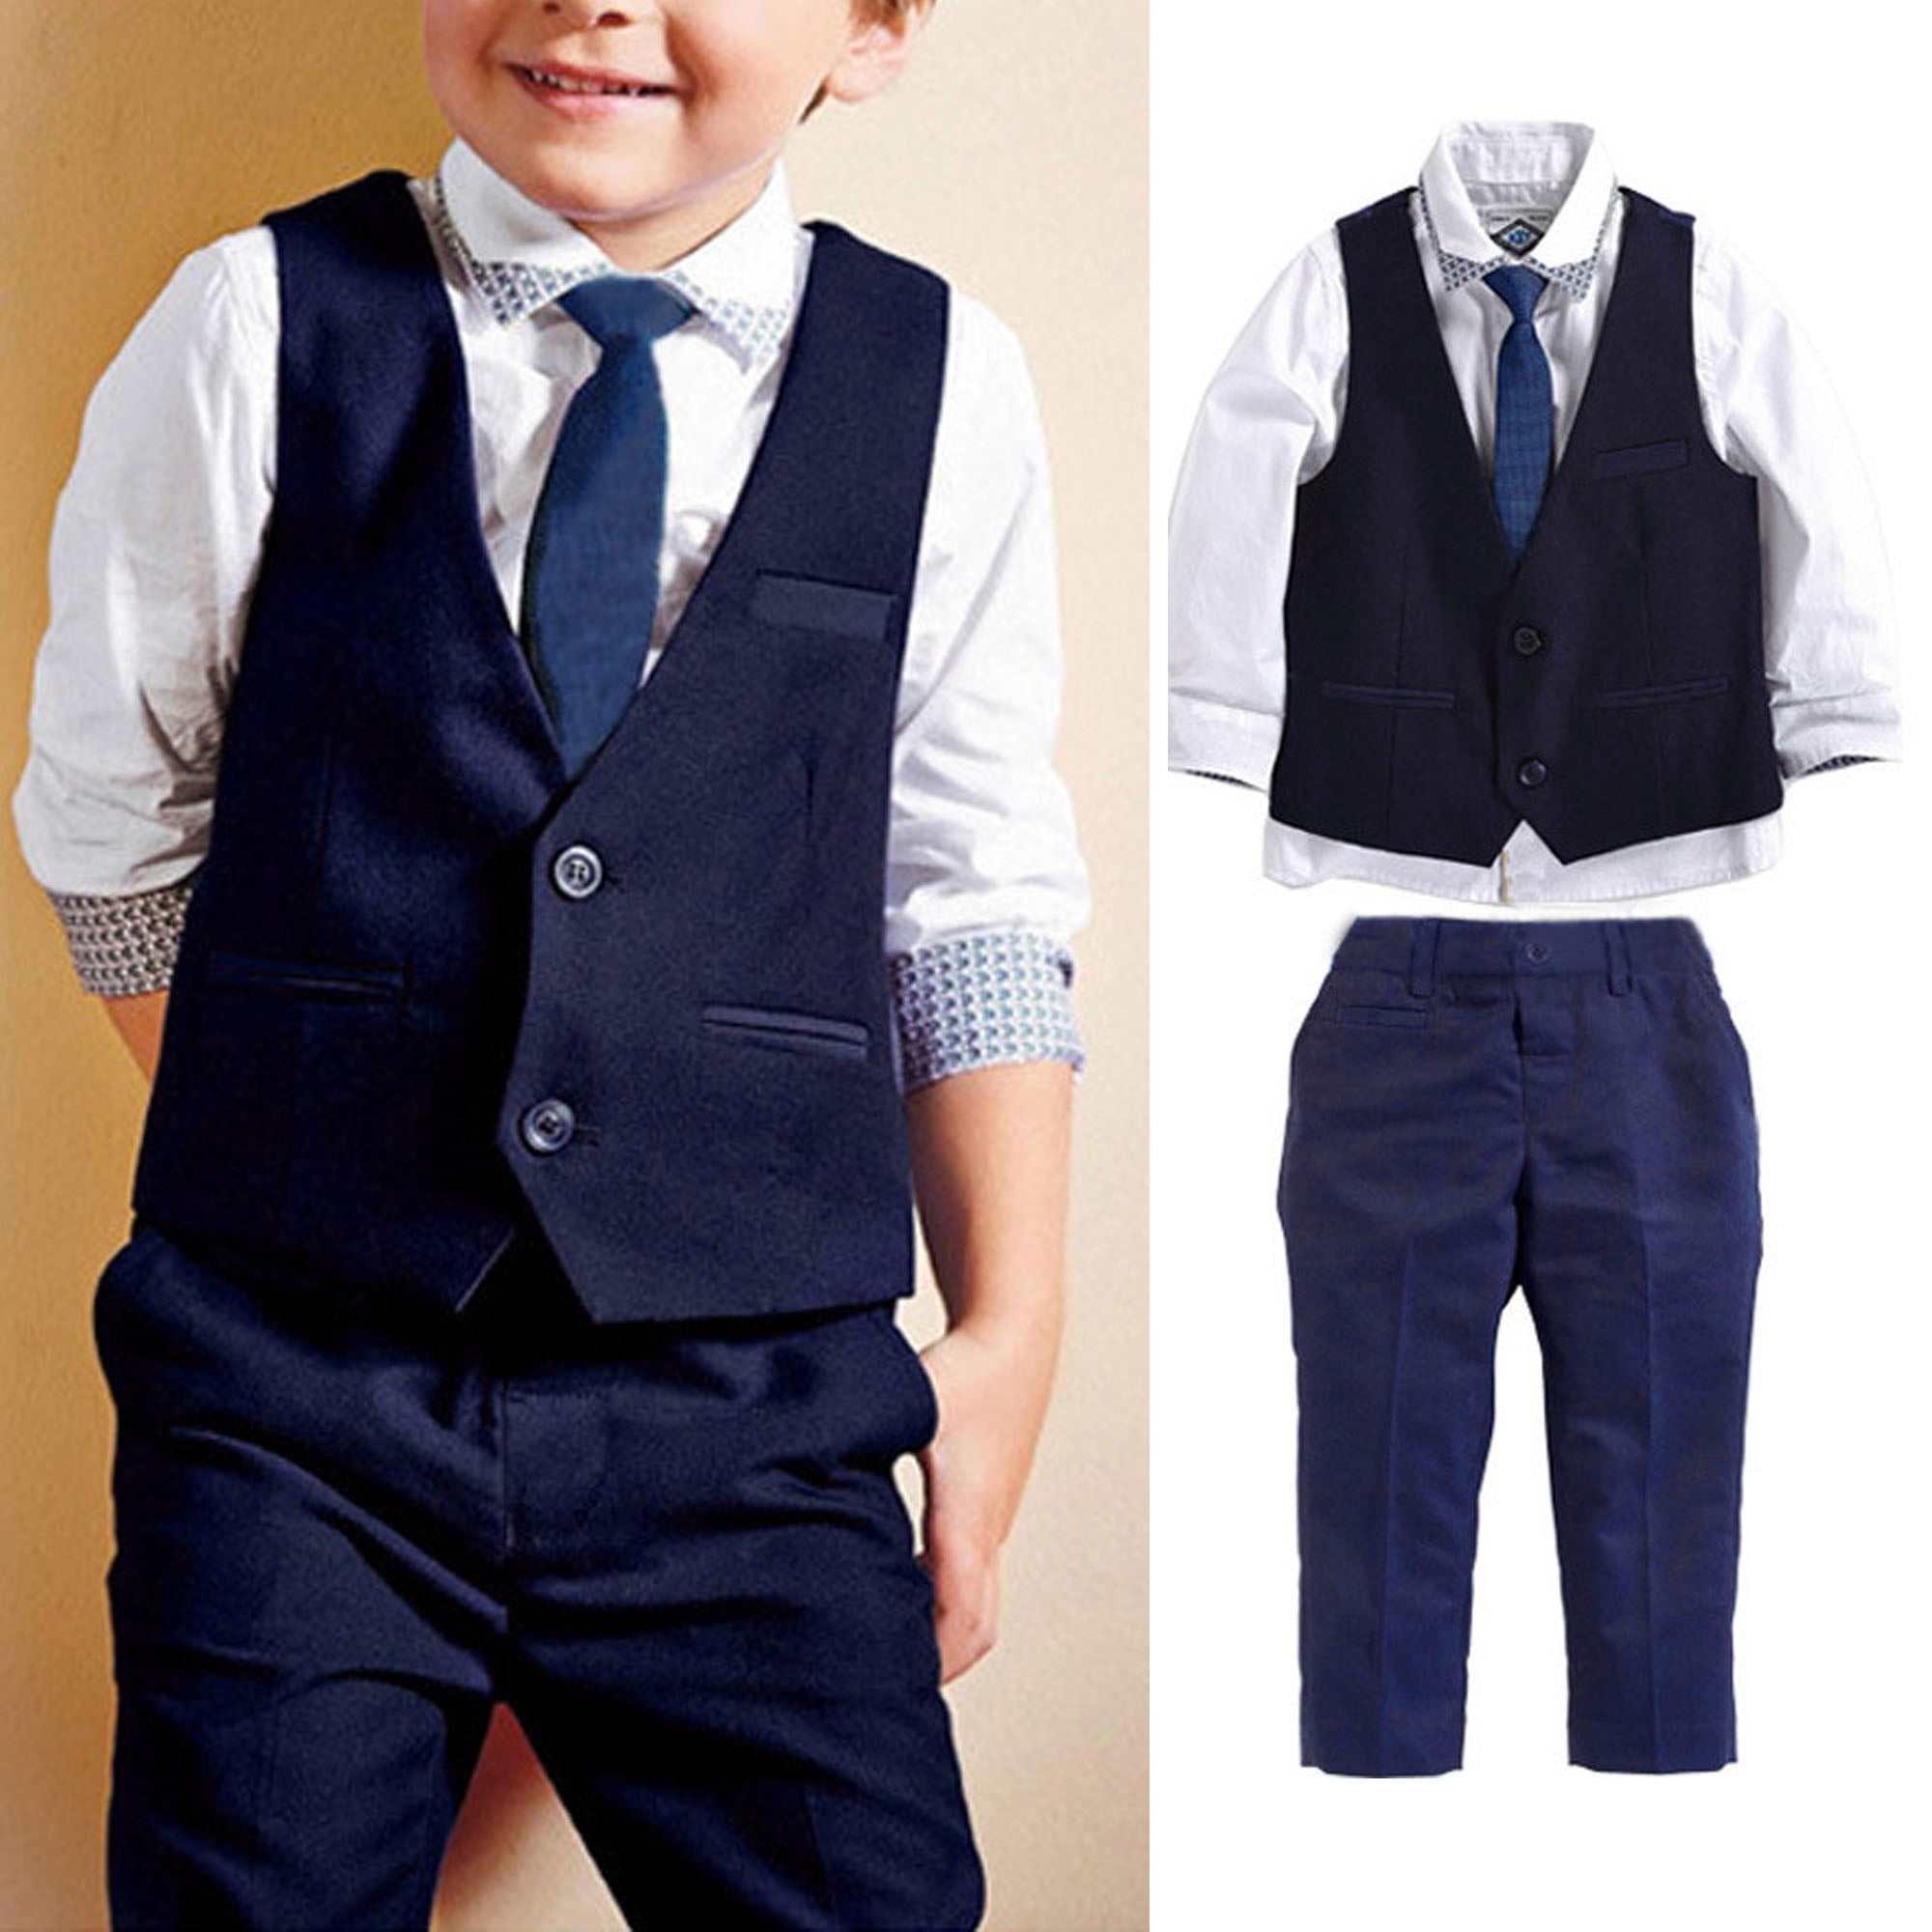 Baby Boys Kids Gentleman Shirt Romper Waistcoat Outfit Party Wedding Formal Suit 